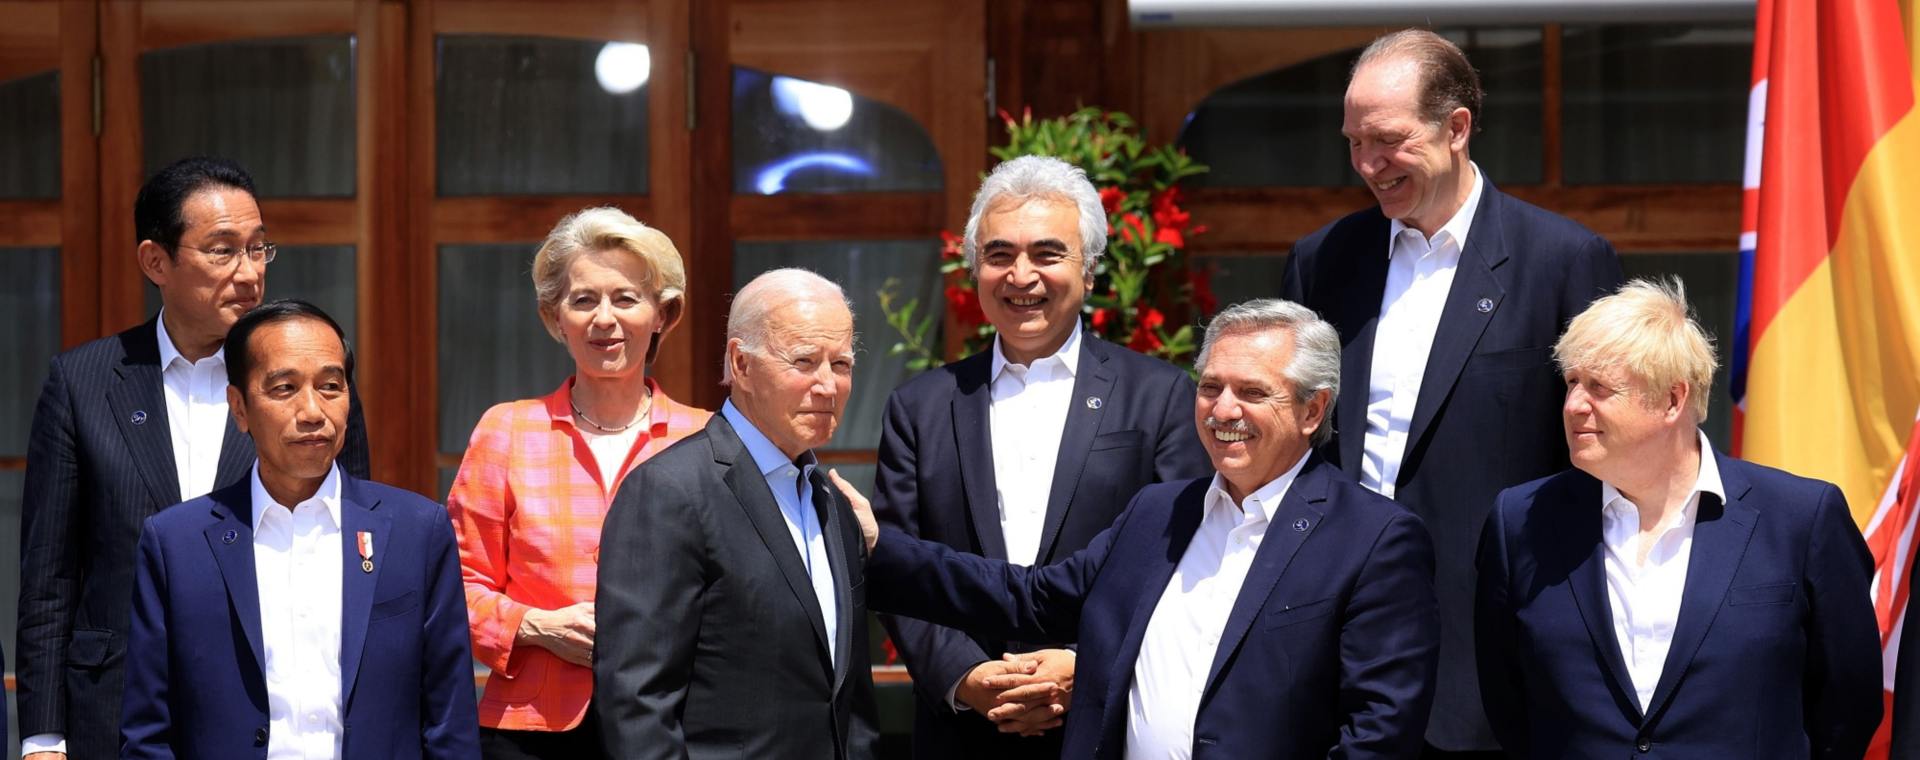 Presiden AS Joe Biden, kiri tengah, dan Alberto Fernandez, presiden Argentina, pada sesi foto di hari kedua pertemuan para pemimpin G7 di hotel Schloss Elmau di Elmau, Jerman, Senin, (27/6 - 2022). Bloomberg / Krisztian Bocsi